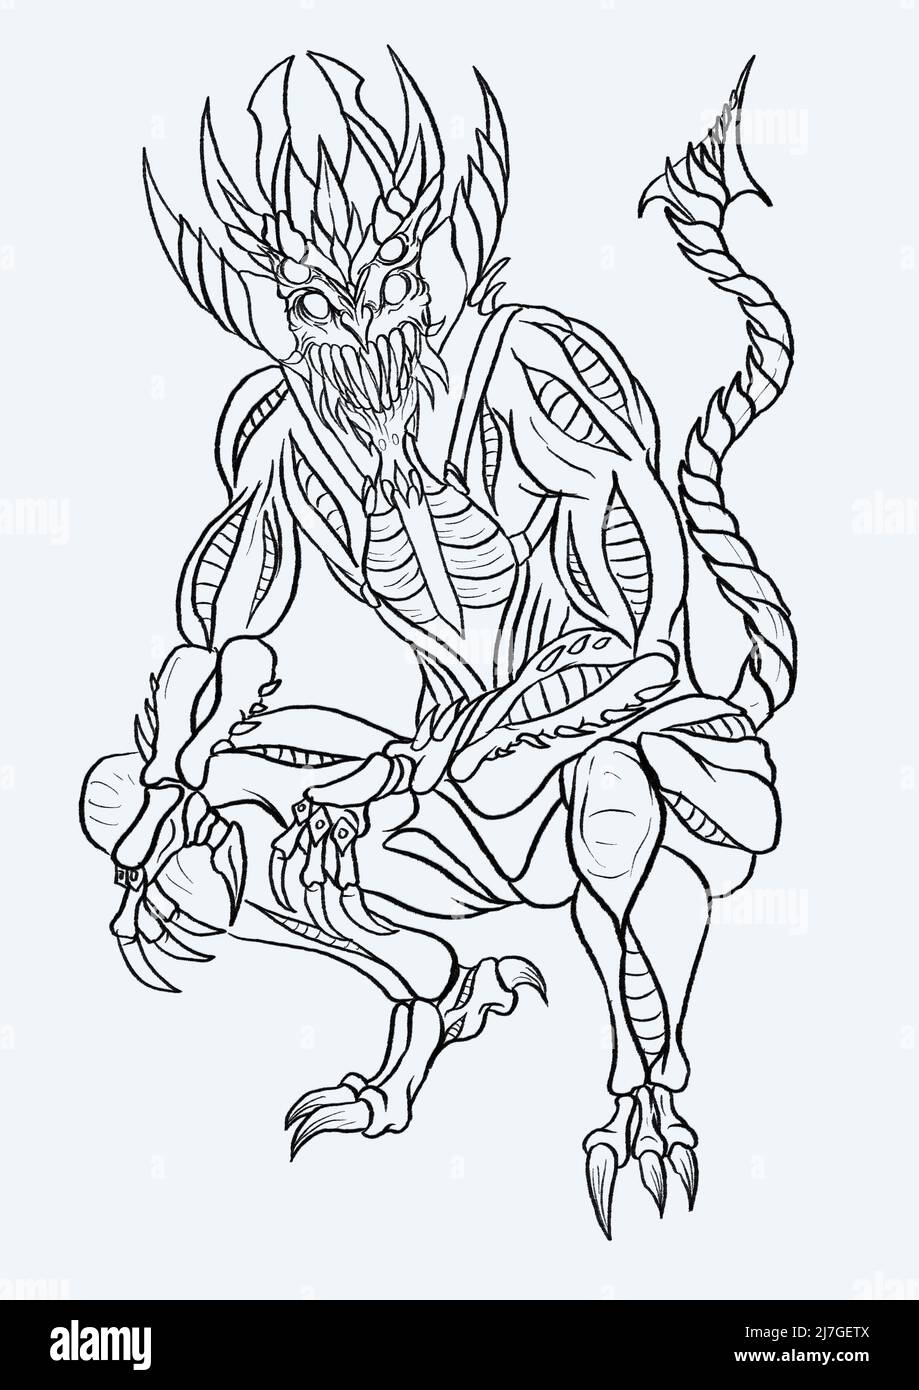 Crouching demon hand drawn illustration stock photo